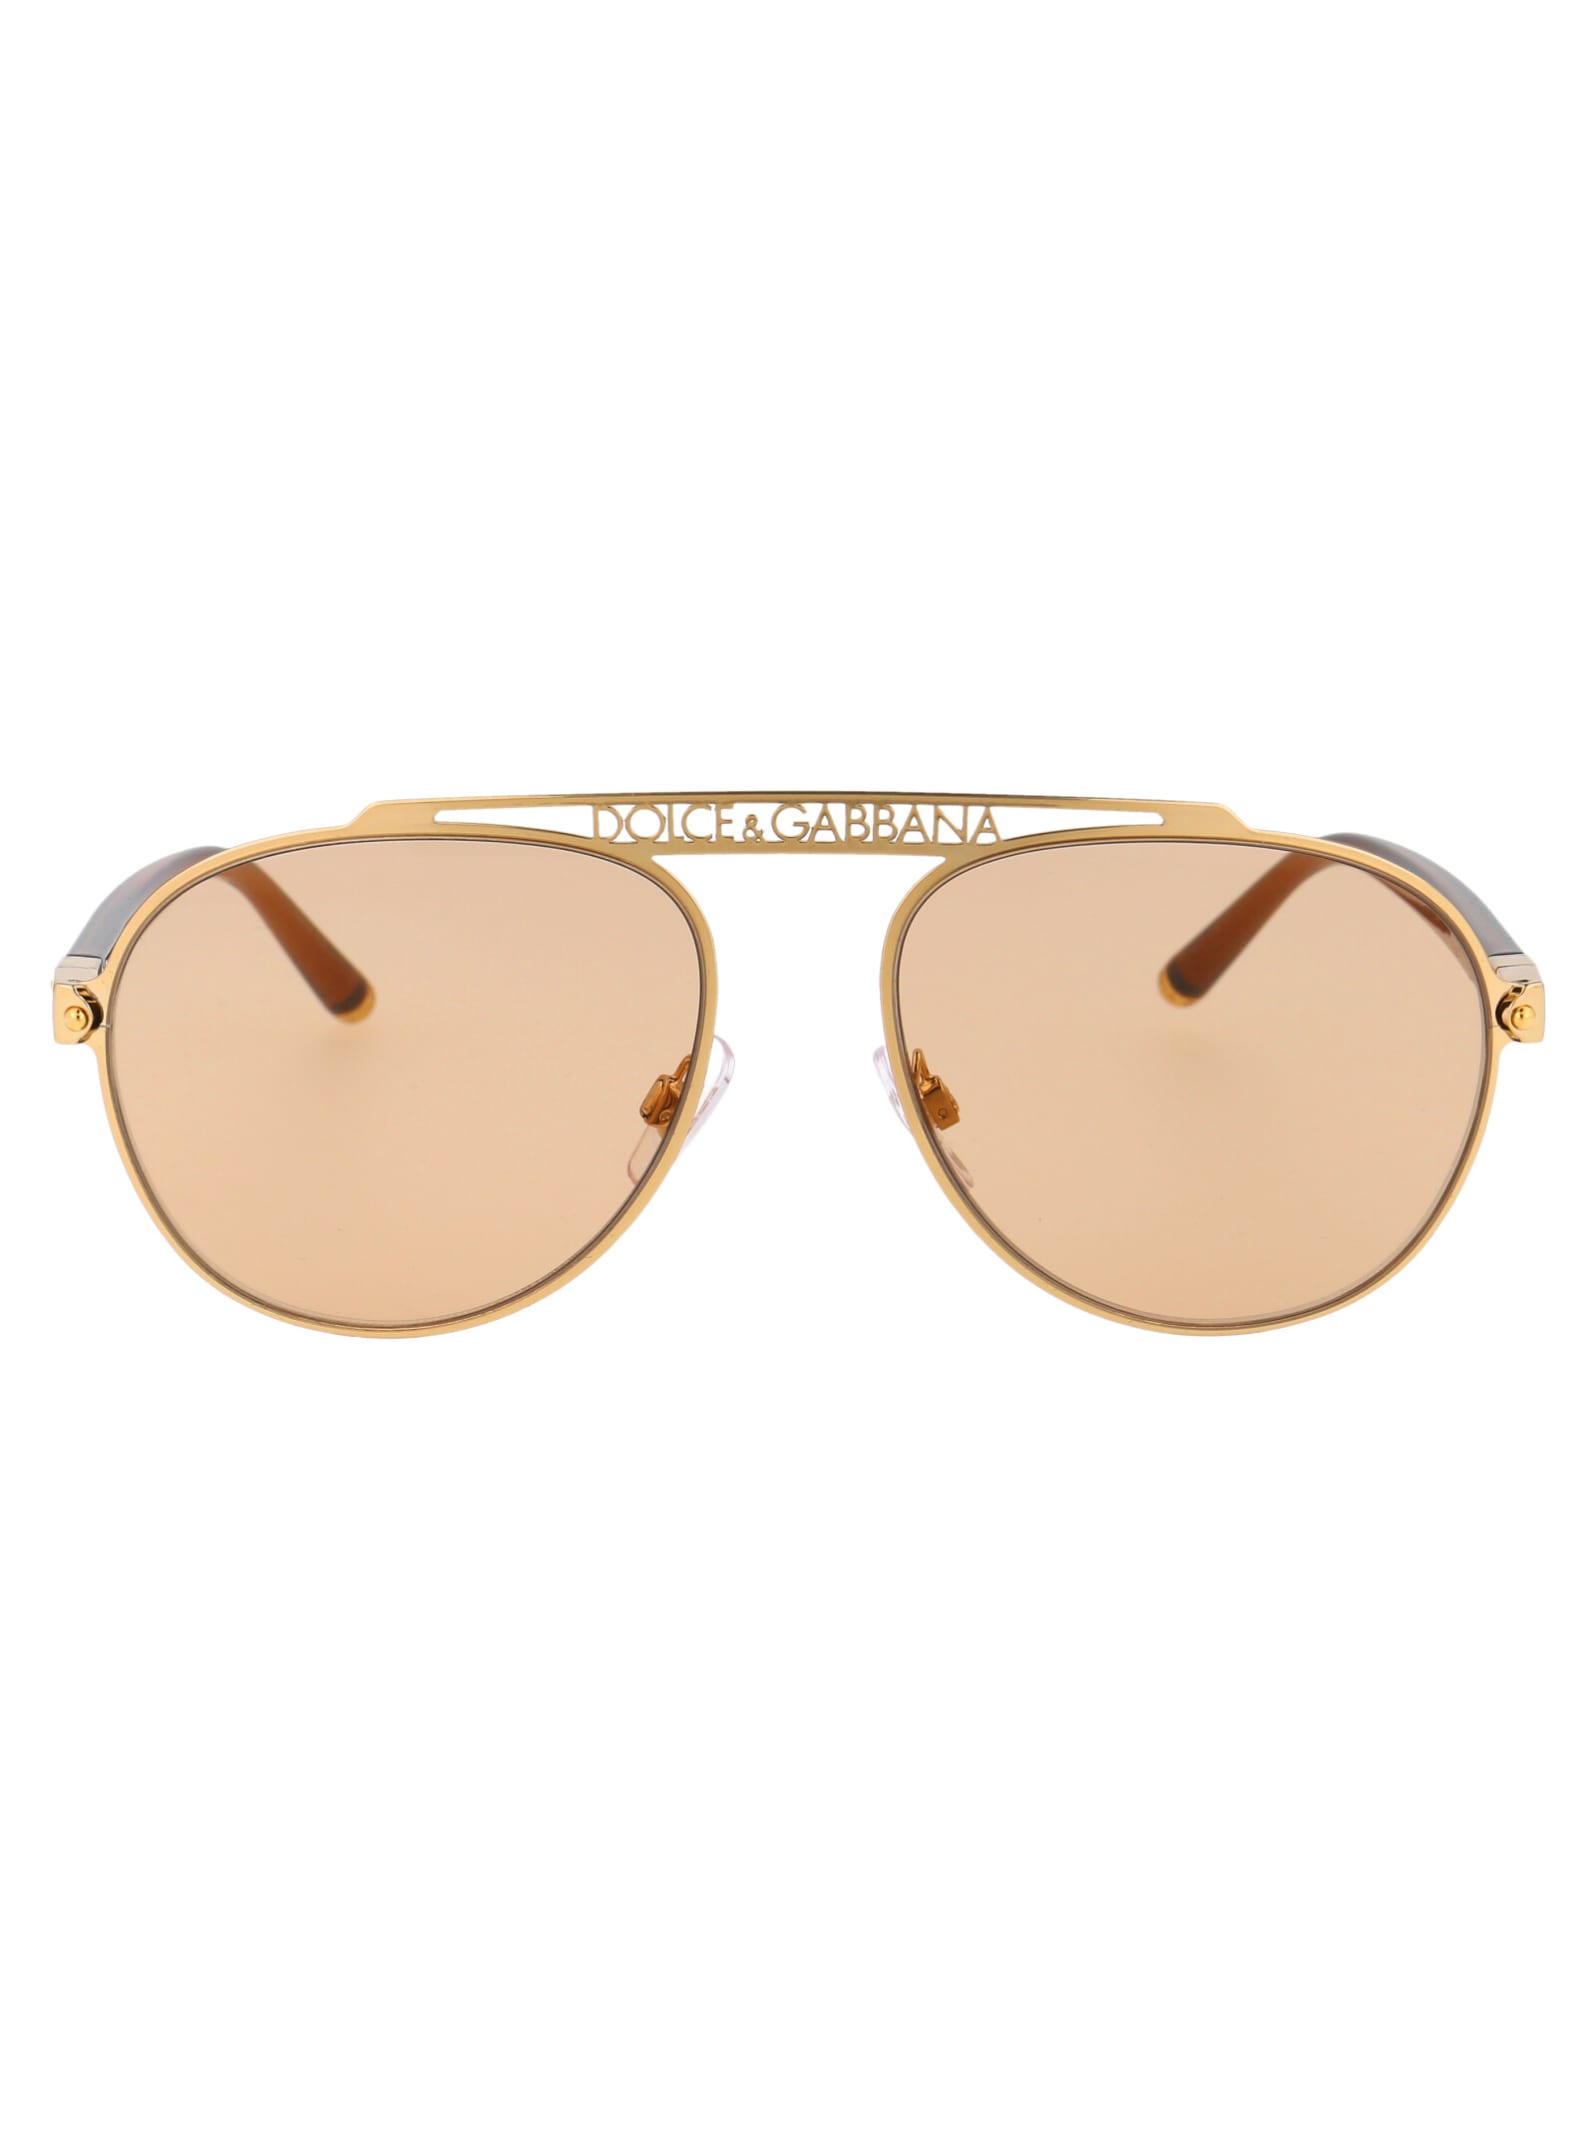 Dolce & Gabbana Eyewear 0dg2235 Sunglasses